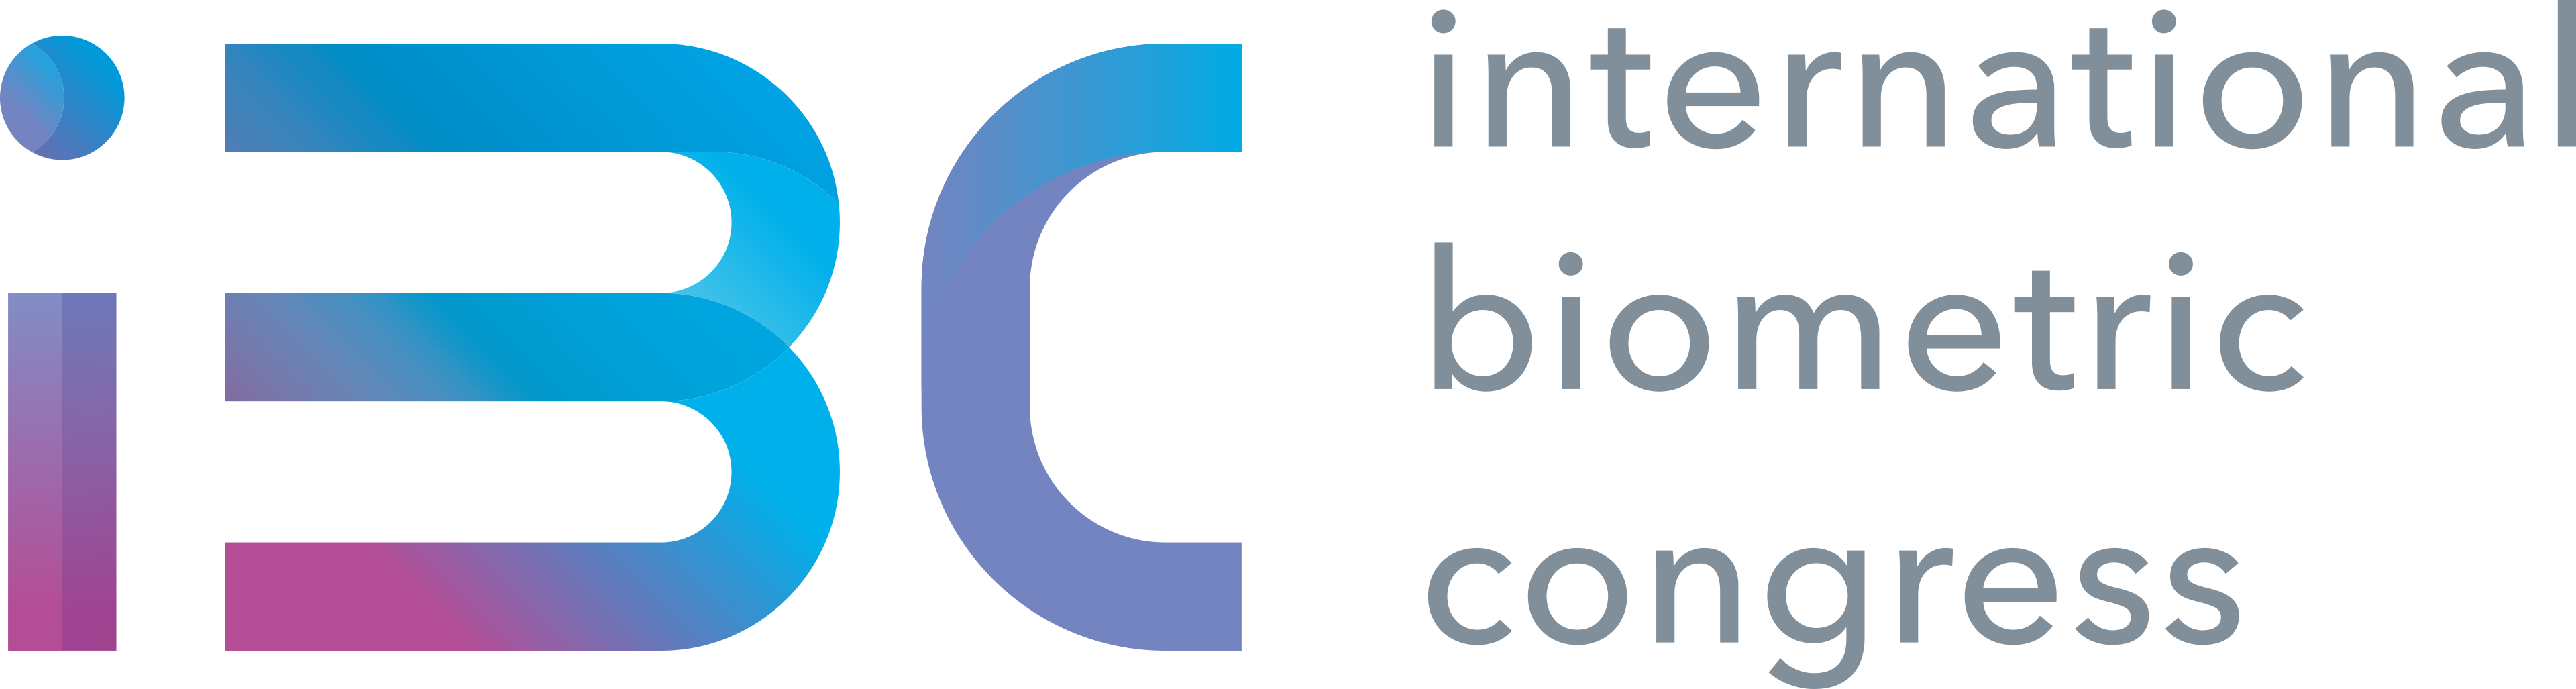 International Biometric Congress 2018